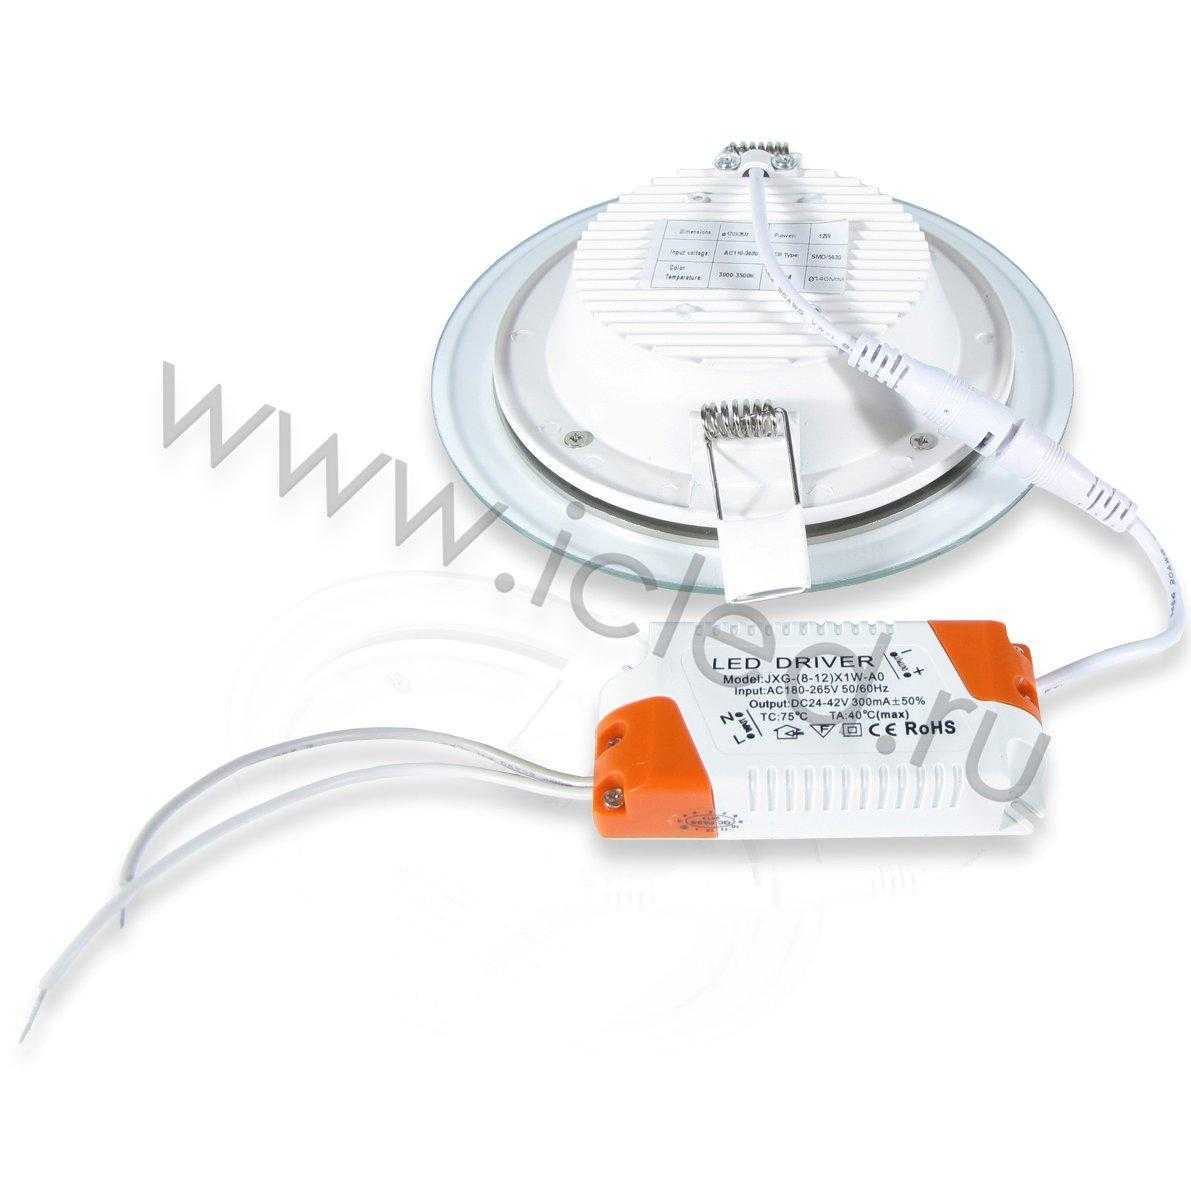 Светодиодные светильники Светодиодный светильник встраиваемый IC-RS D160  (12W, Warm White)